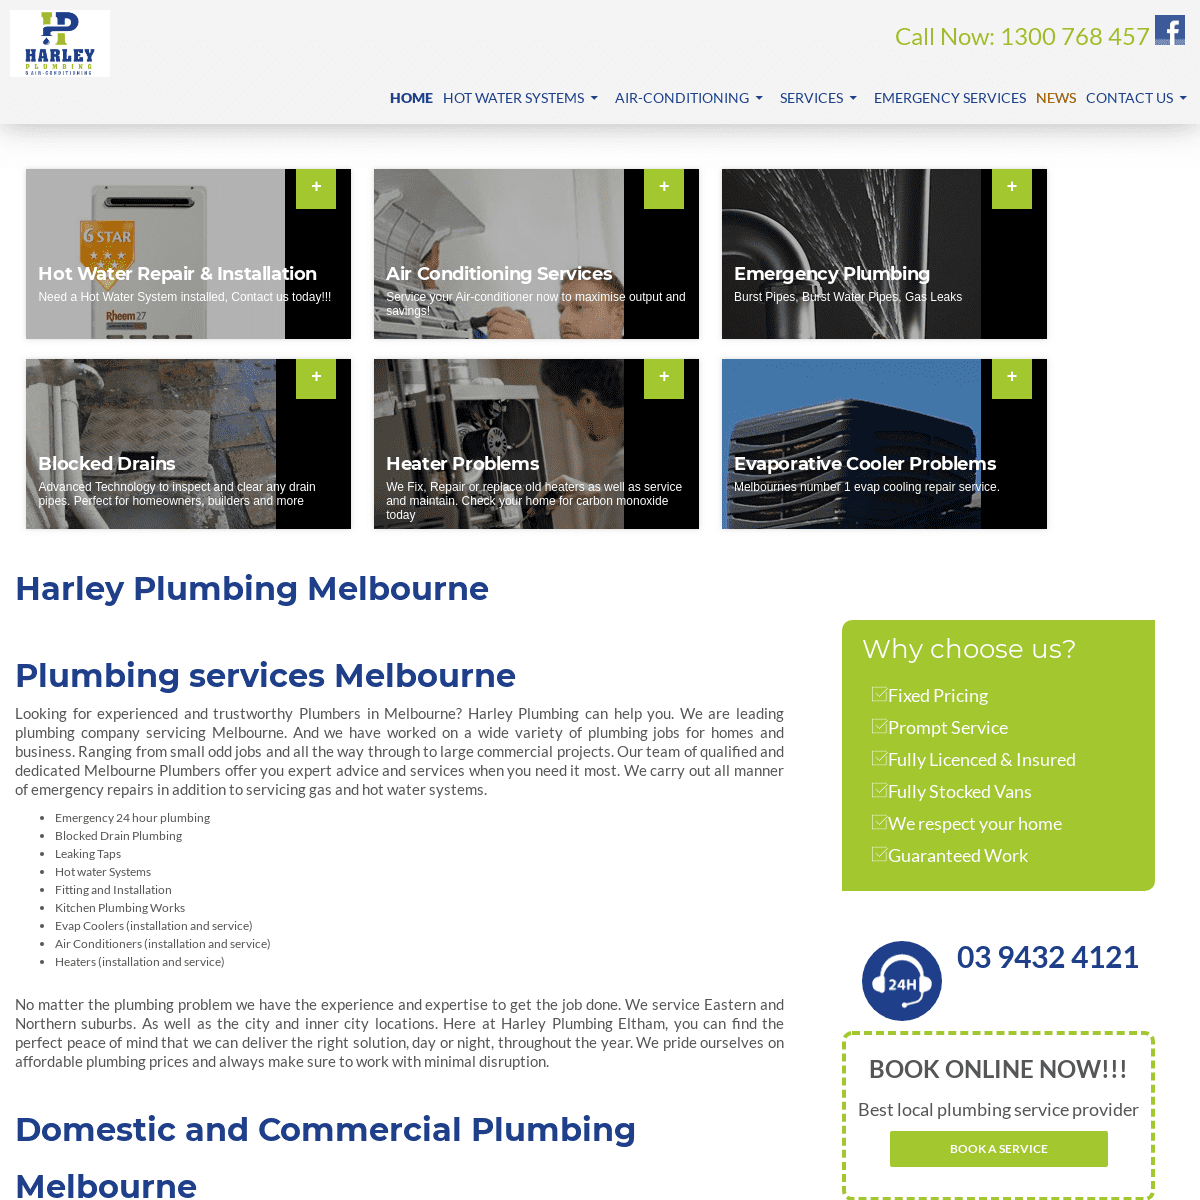 A complete backup of harleyplumbing.com.au